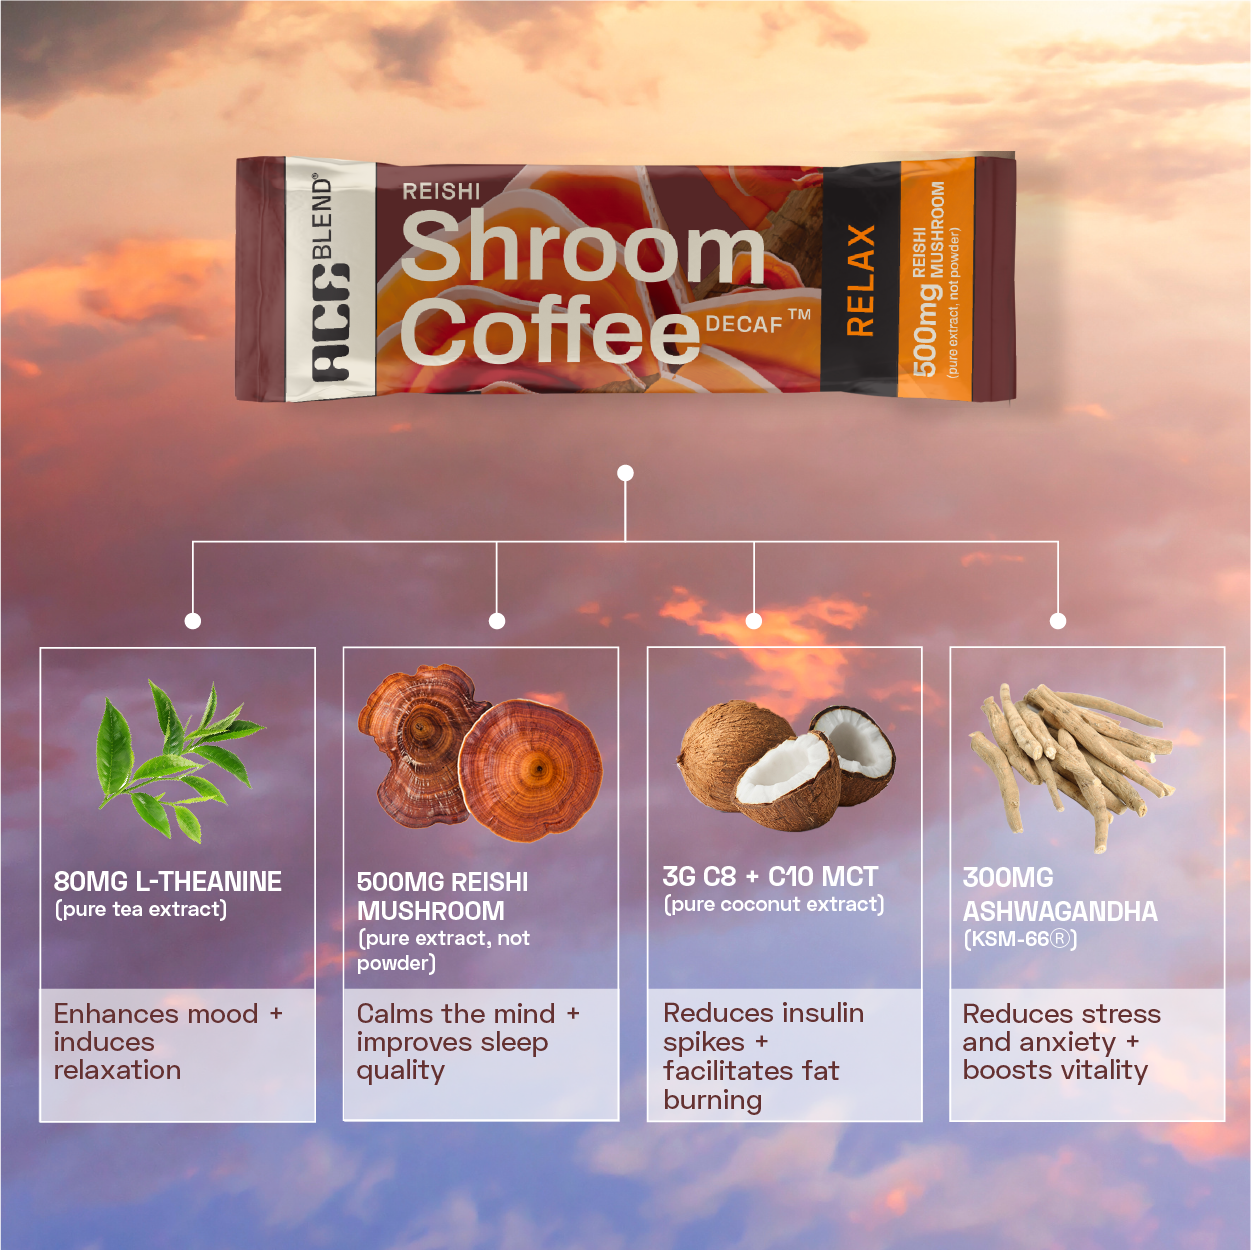 Functional Shroom Coffee Combo (Lion's Mane, Reishi & Cordyceps) - 45 Servings Pack